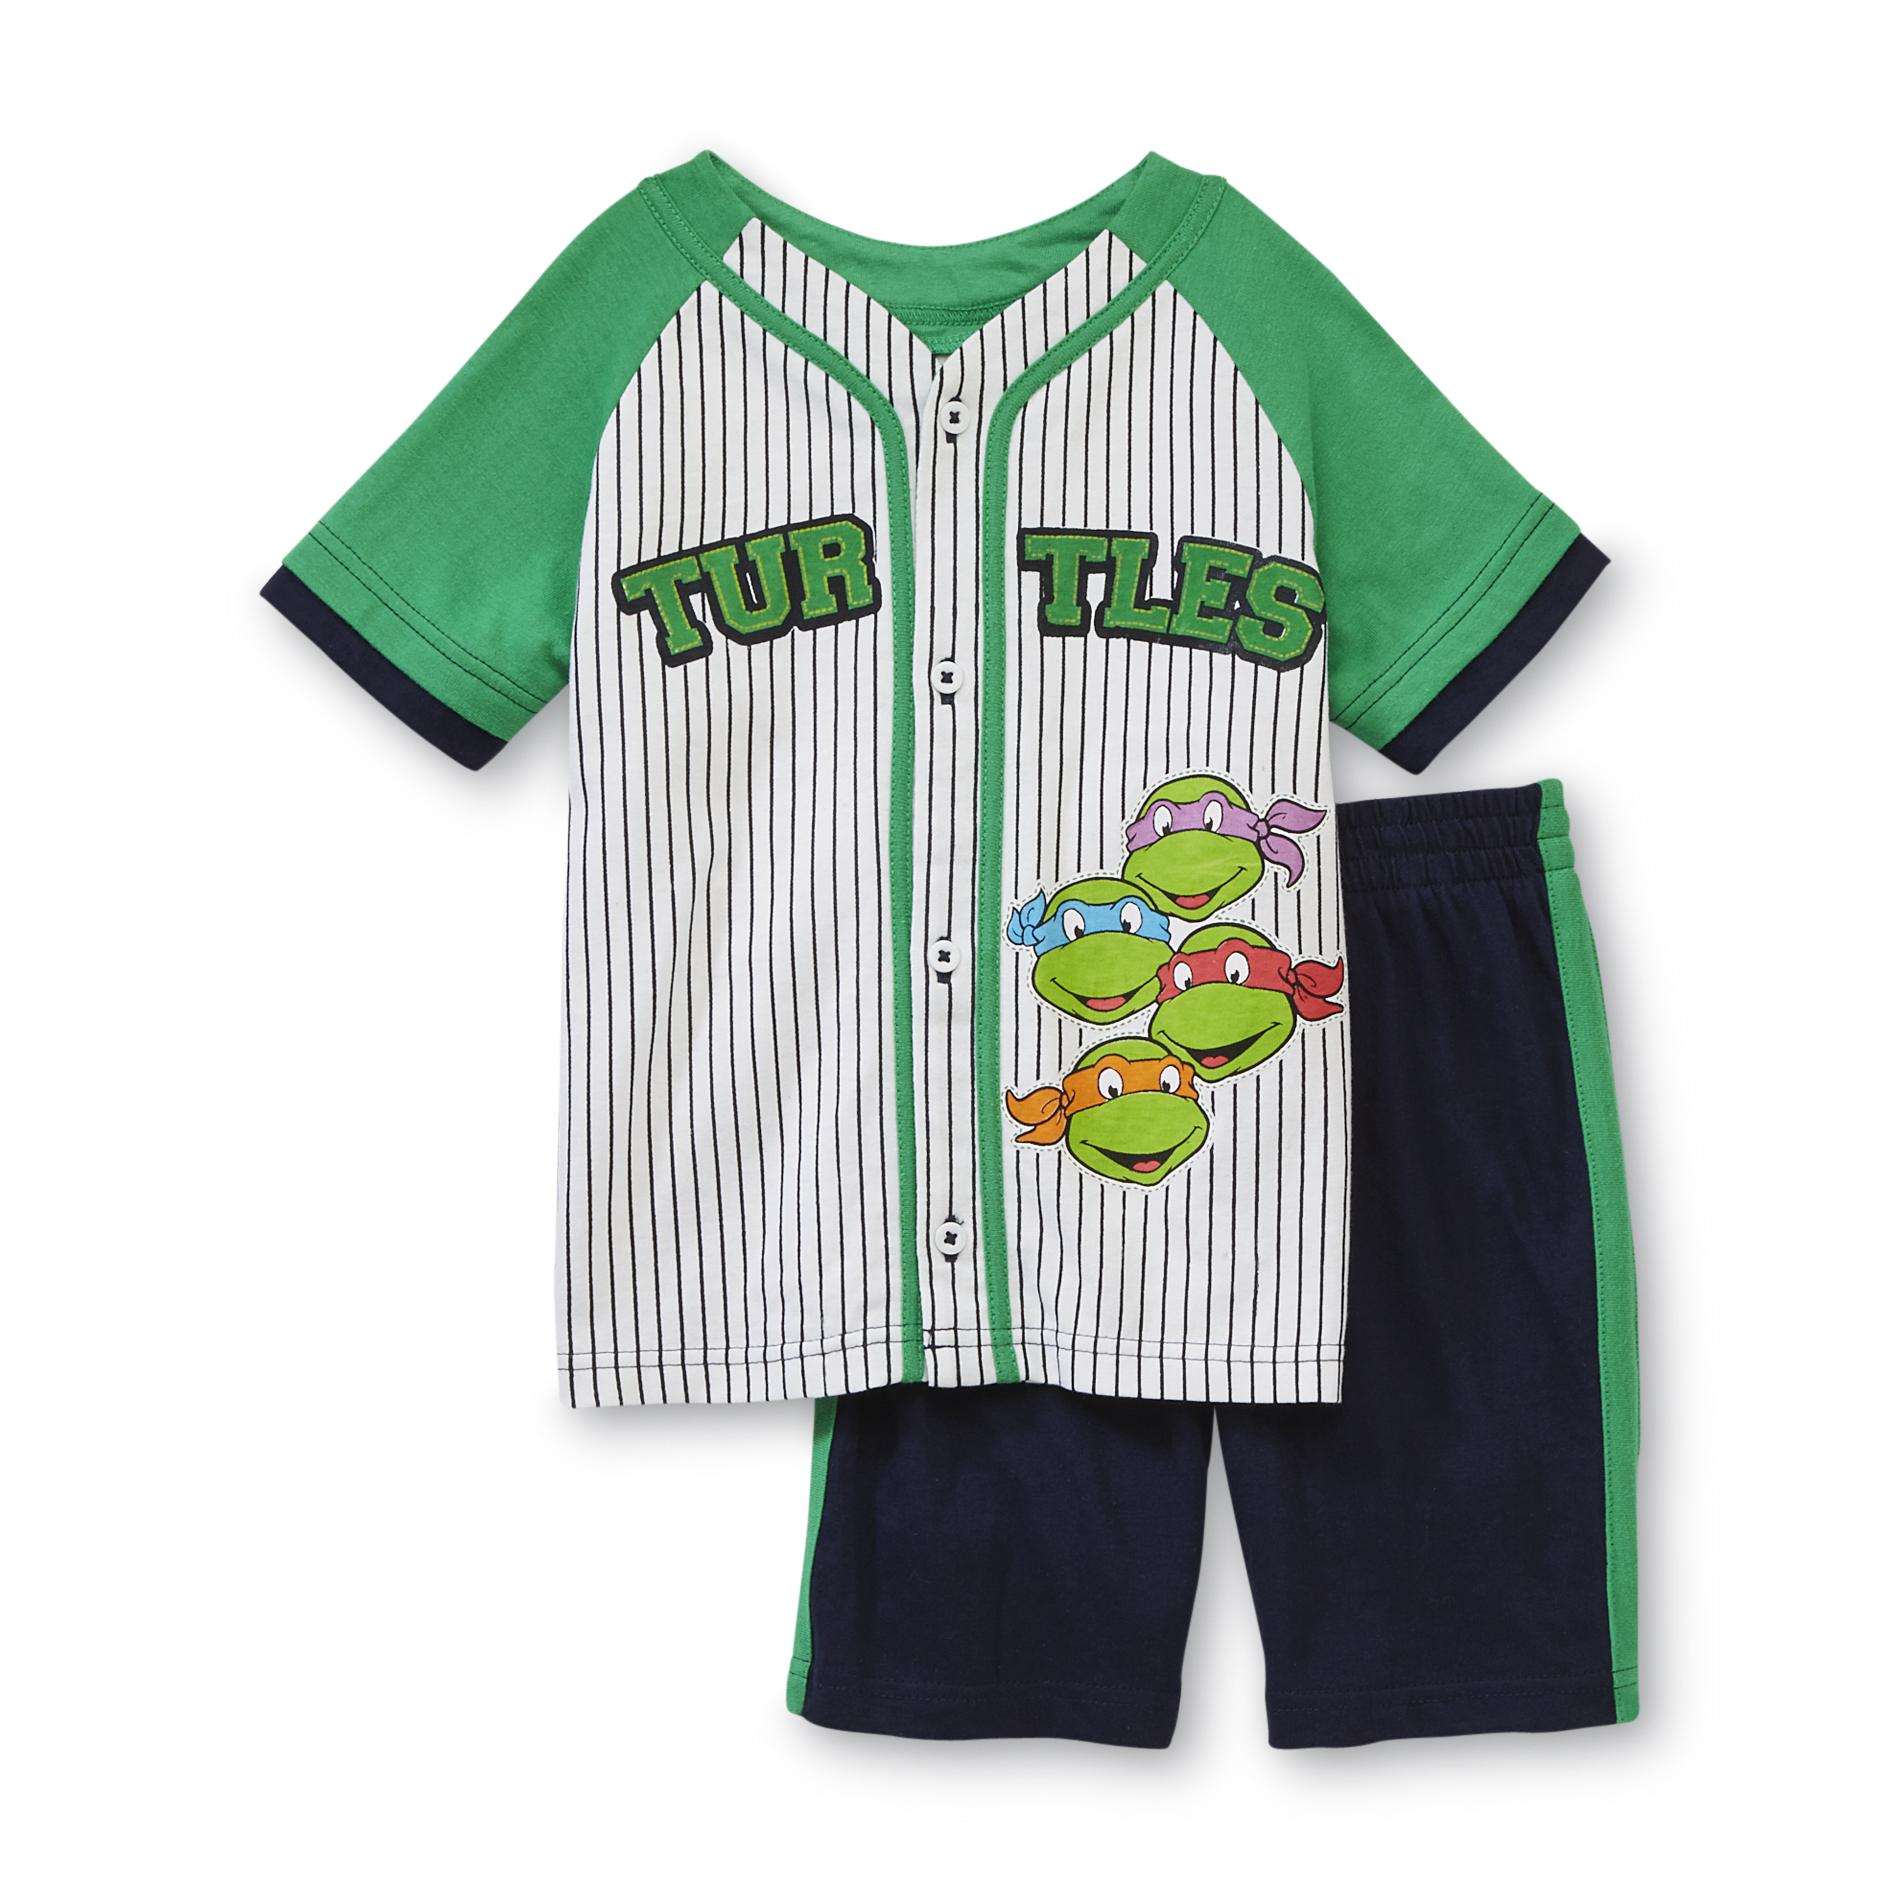 Nickelodeon Toddler Boy's Baseball Shirt & Shorts - Teenage Mutant Ninja Turtles